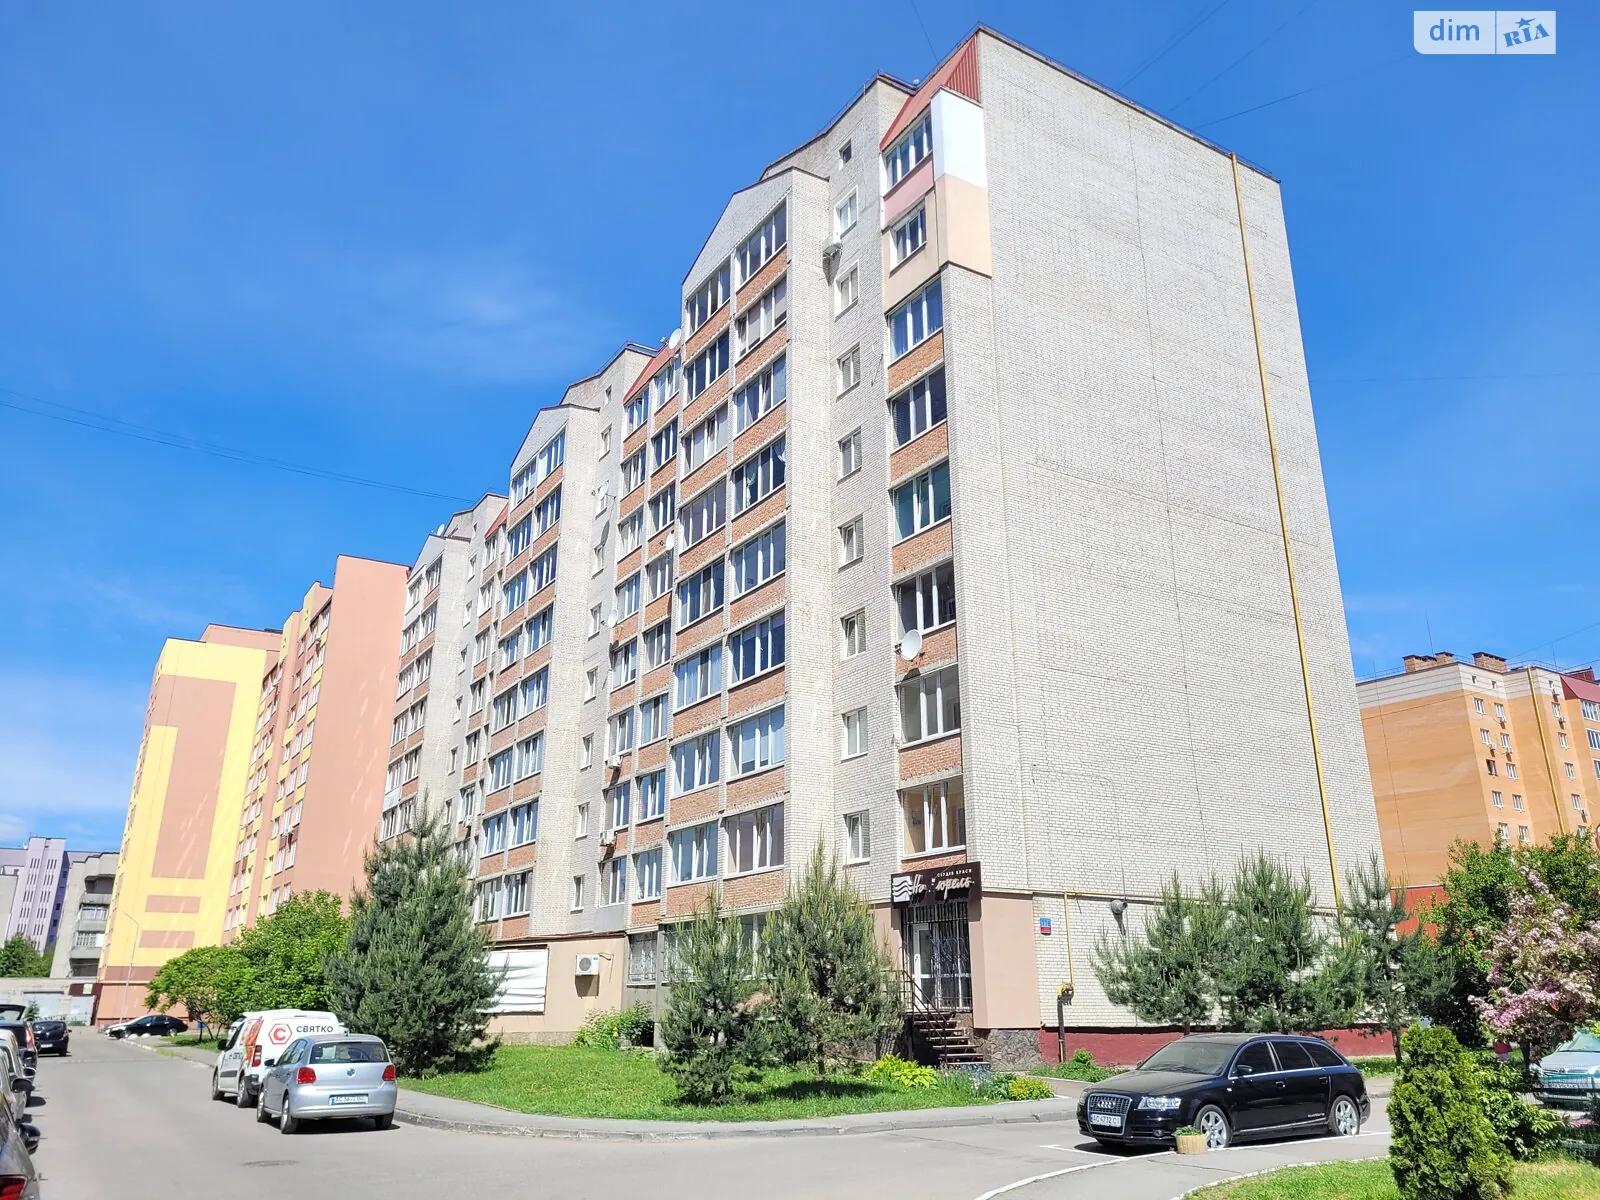 2-кімнатна квартира 72.2 кв. м у Луцьку, цена: 80000 $